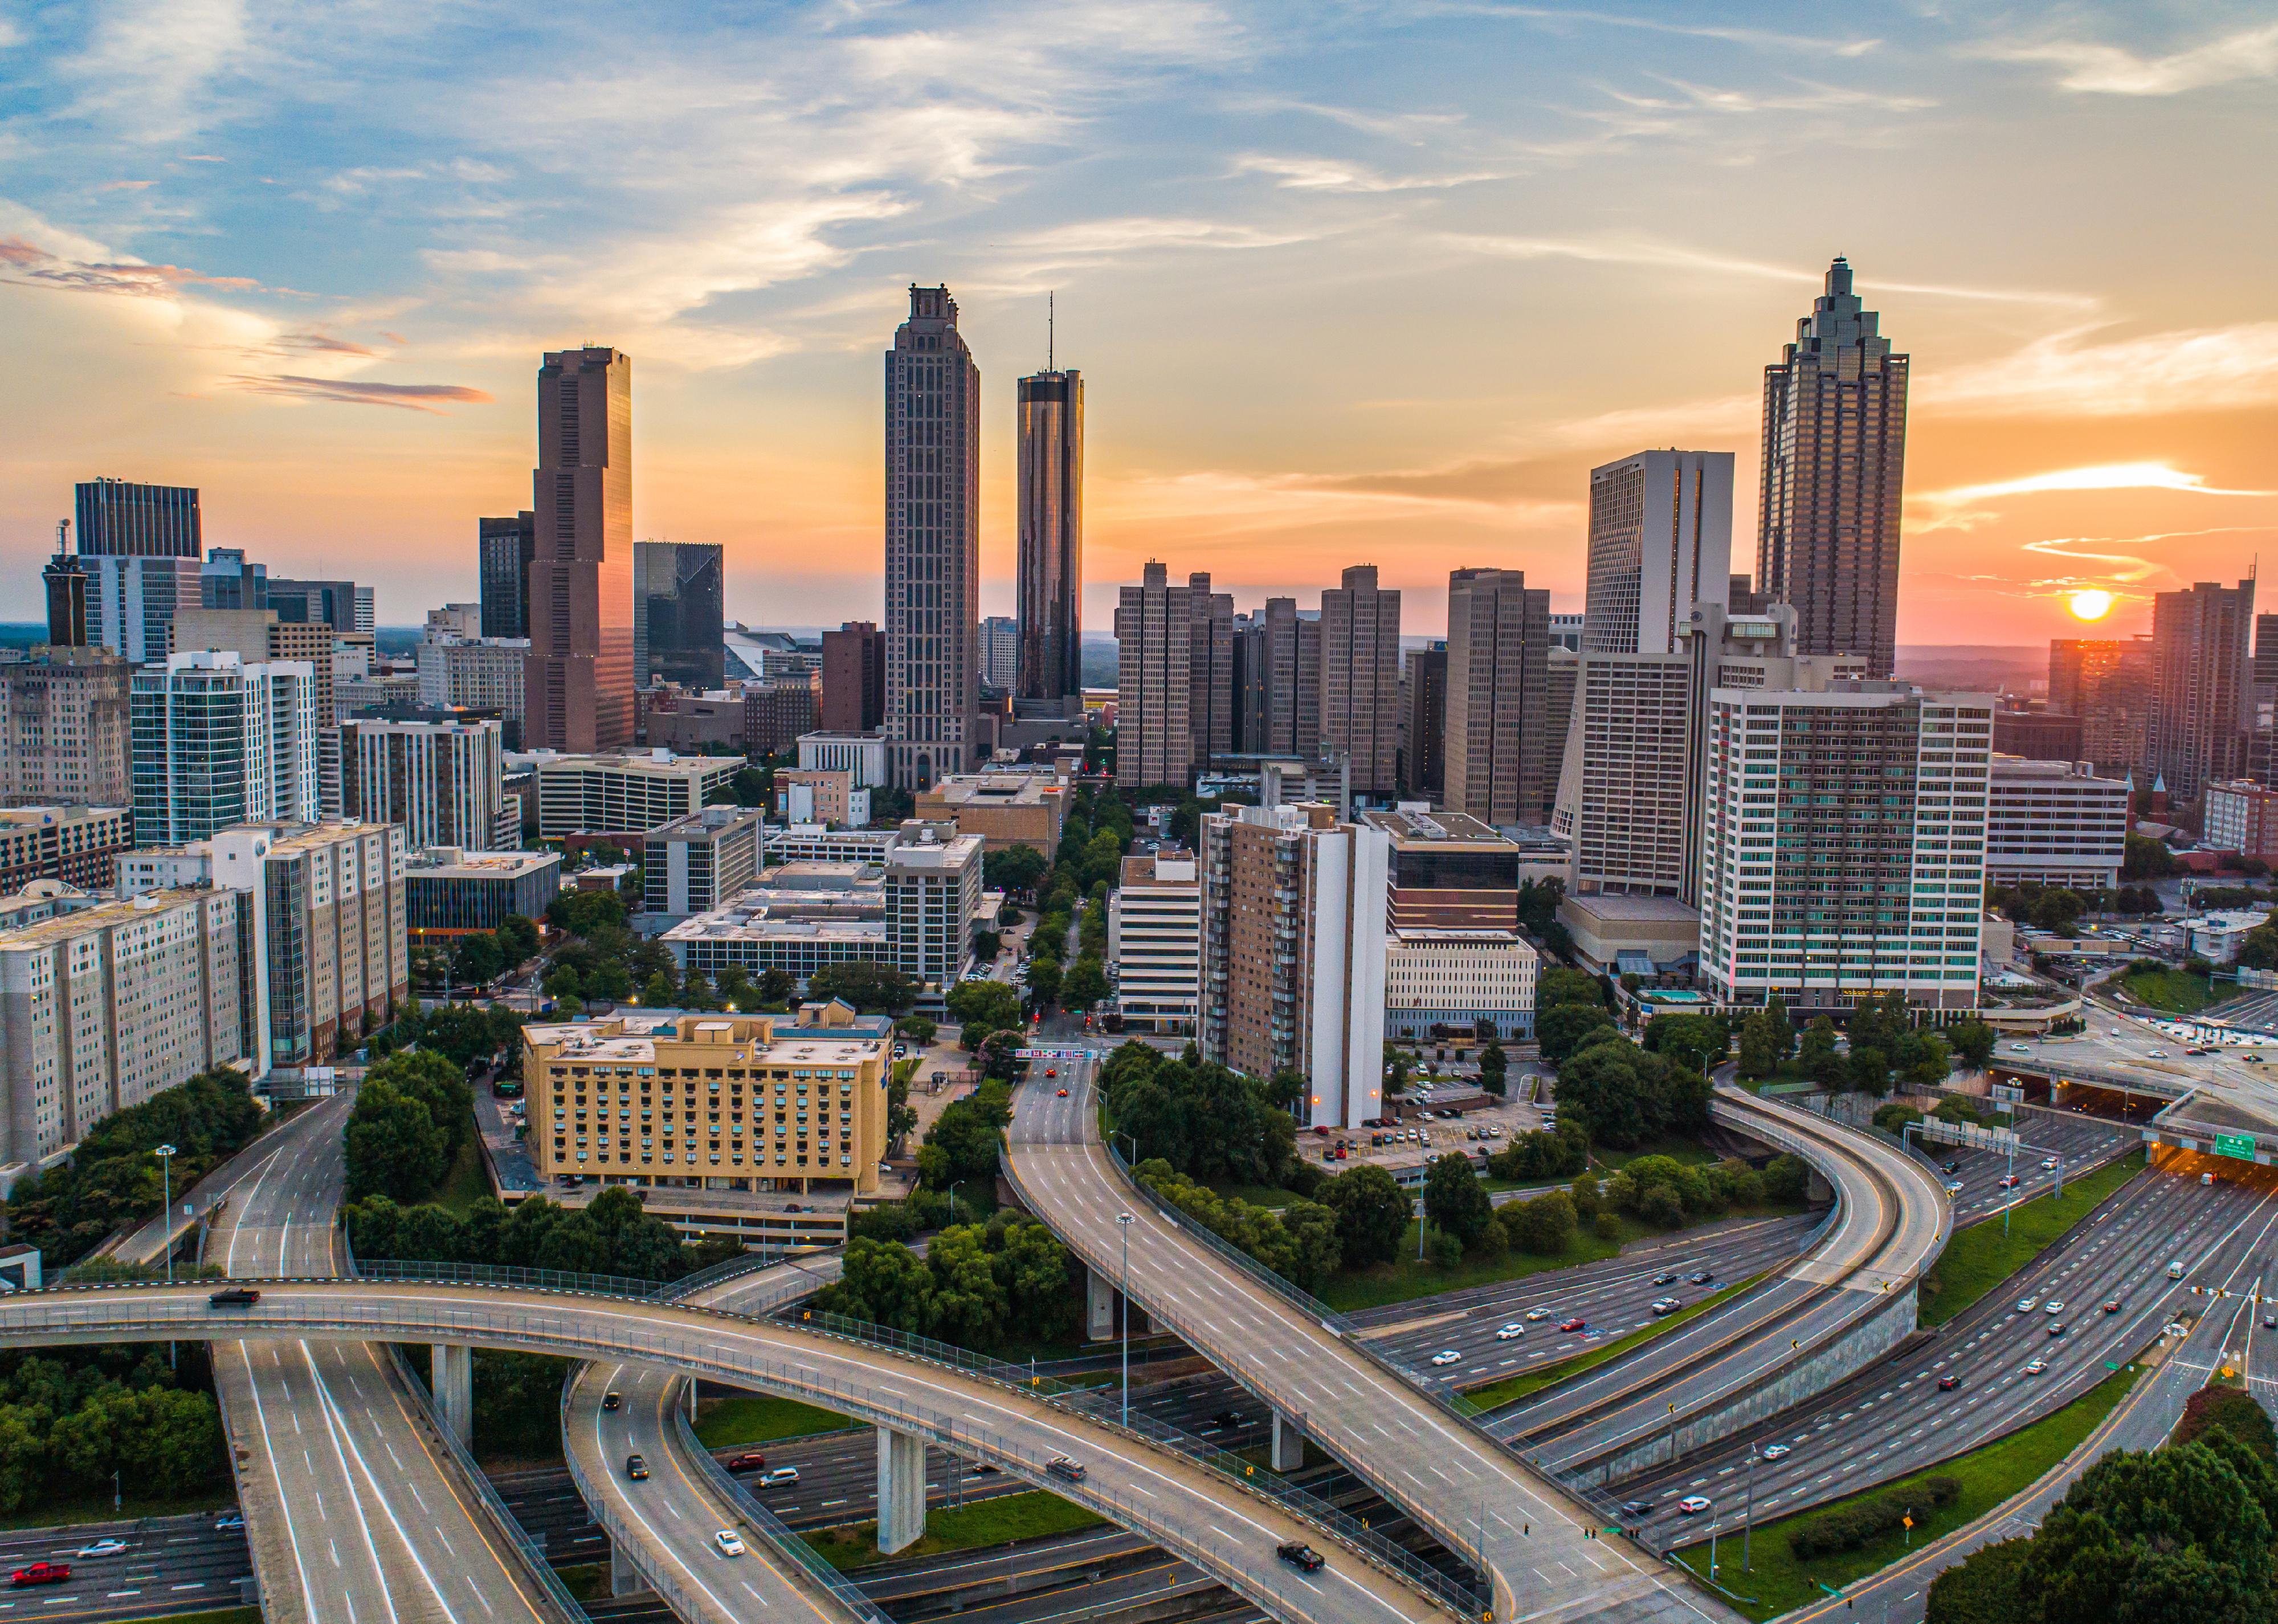 A photo of the Atlanta city skyline